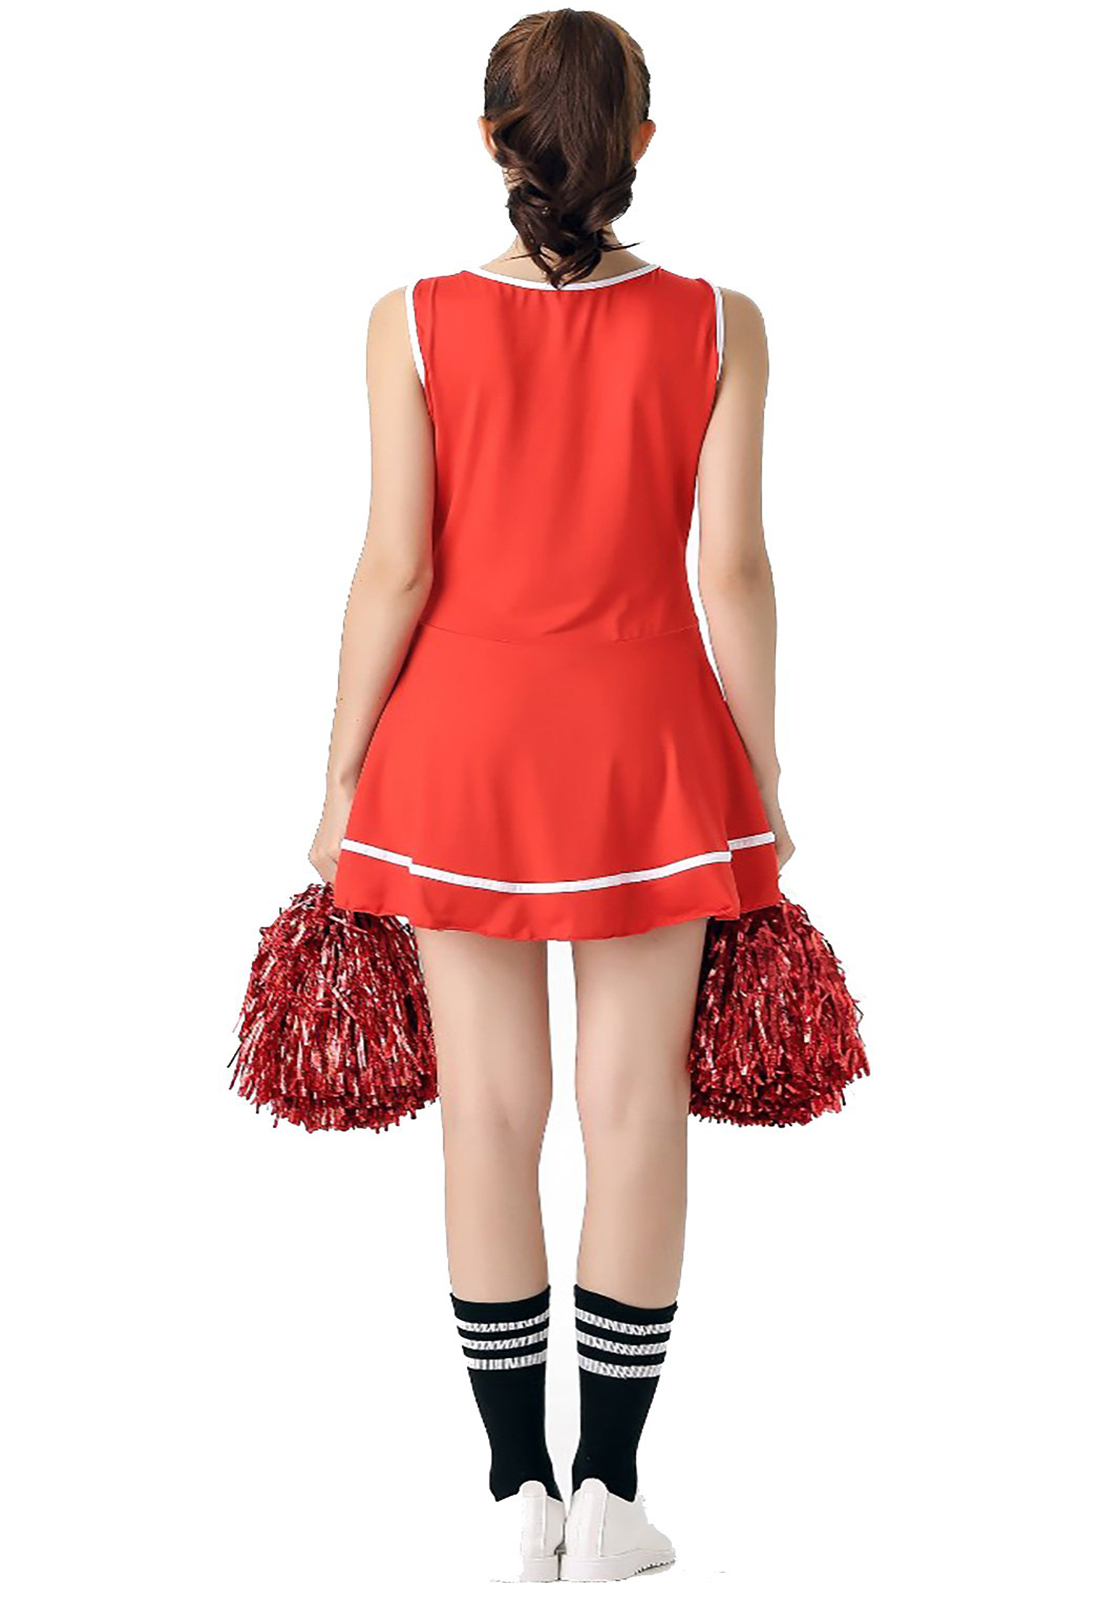 Costume de pom-pom girl rouge déguisement lycée musical uniforme de pom-pom girl sans pompon